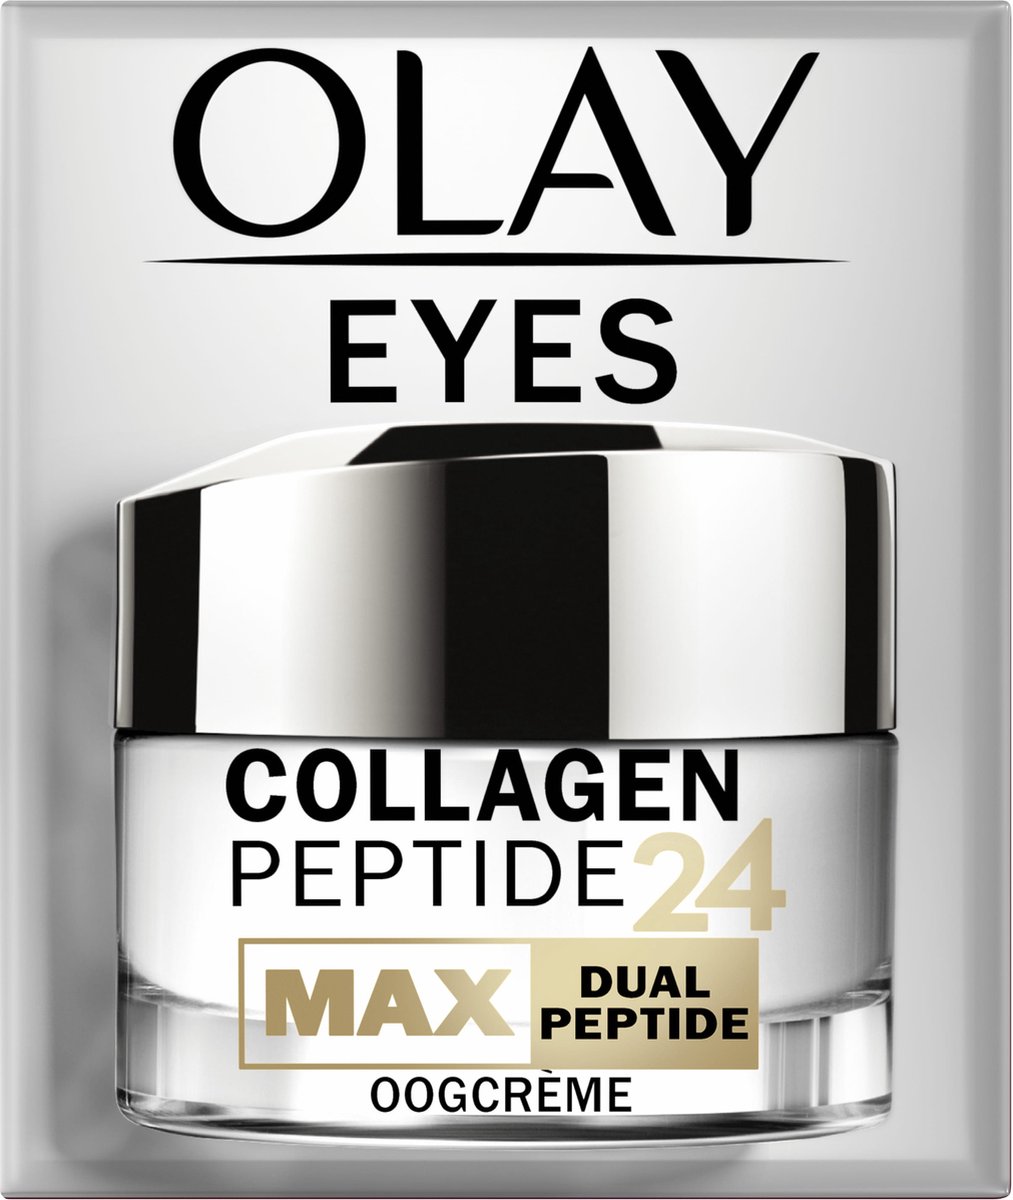 Olay Collageenpeptide 24 Max - Oogcrème - Met Collageenpeptide & Niacinamide -Parfumvrij - 15ml - Olay